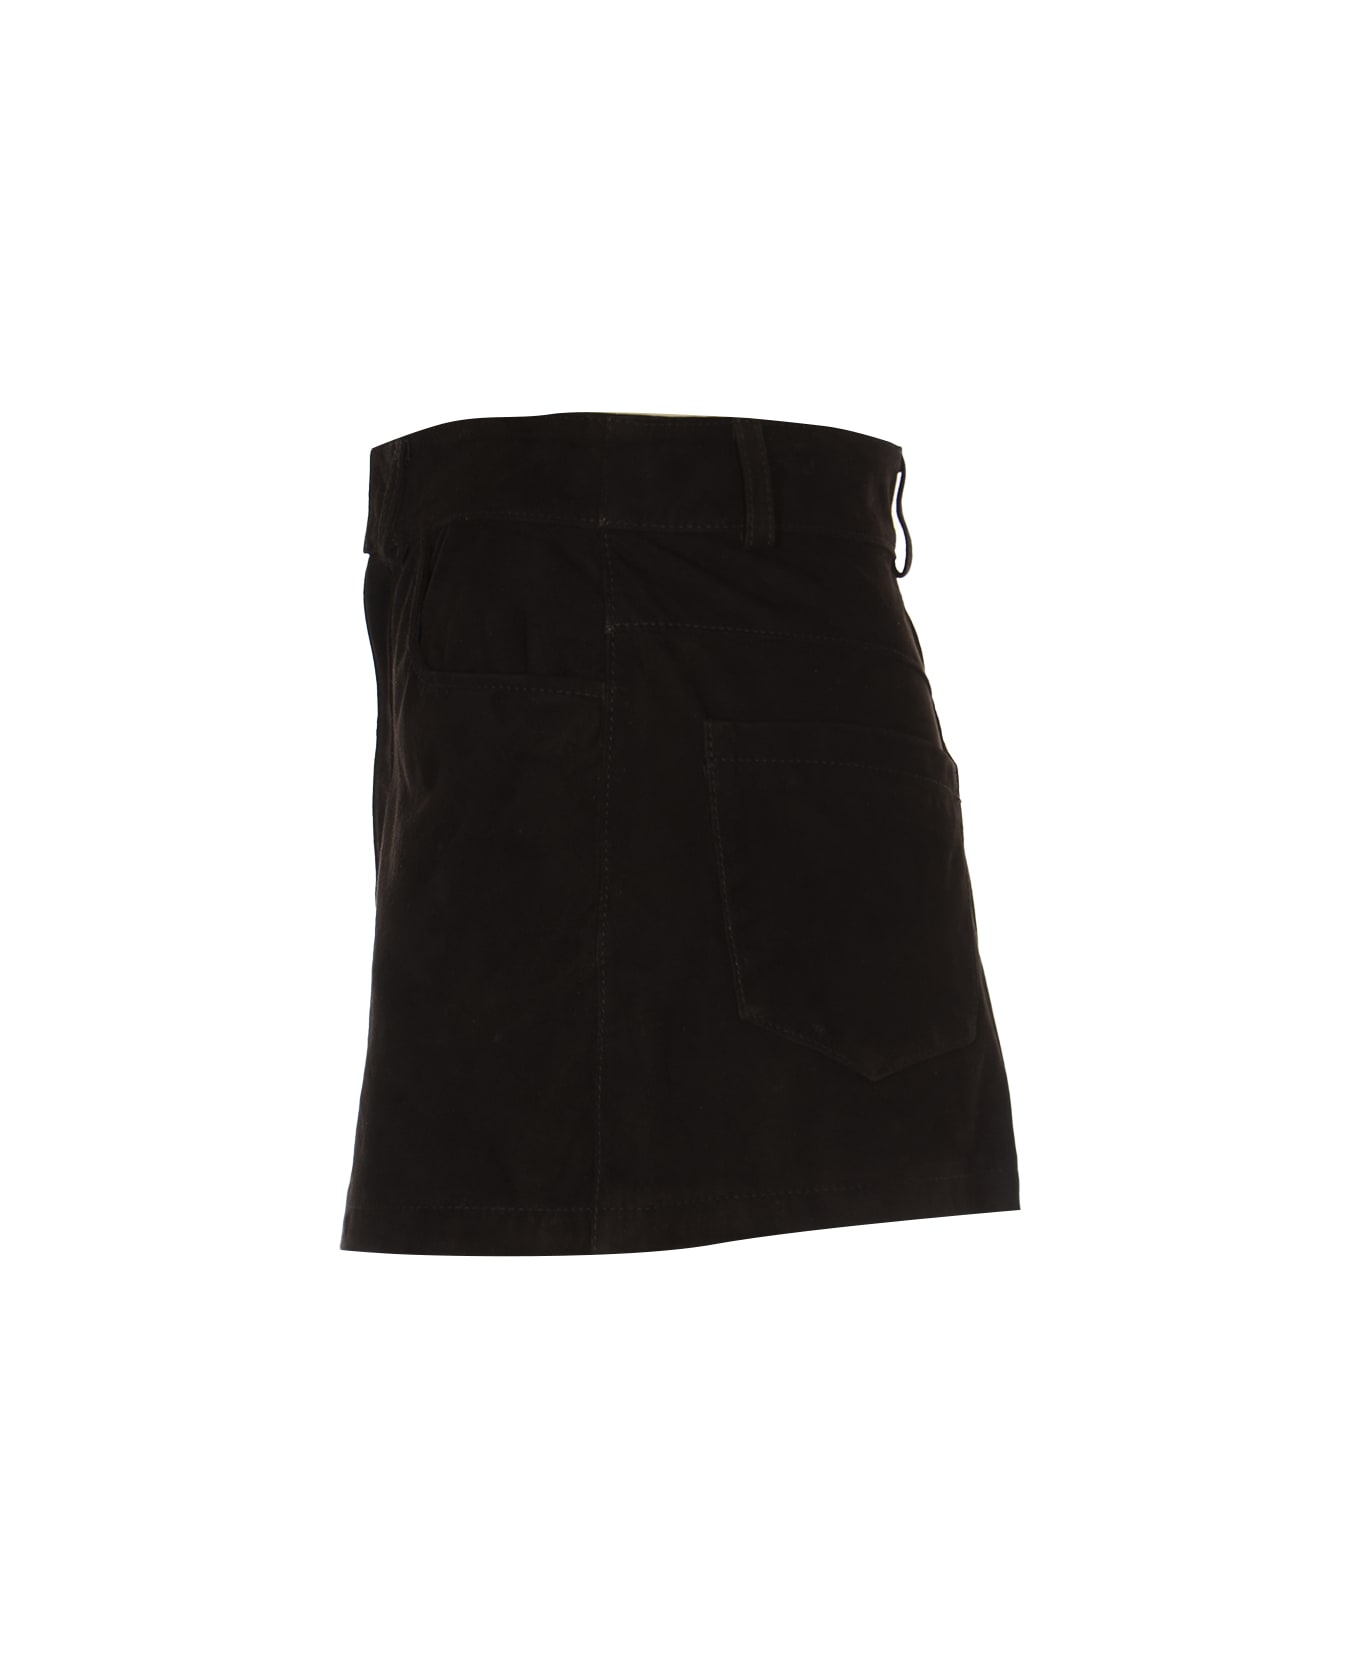 DFour 5 Pockets Short Skirt - Black